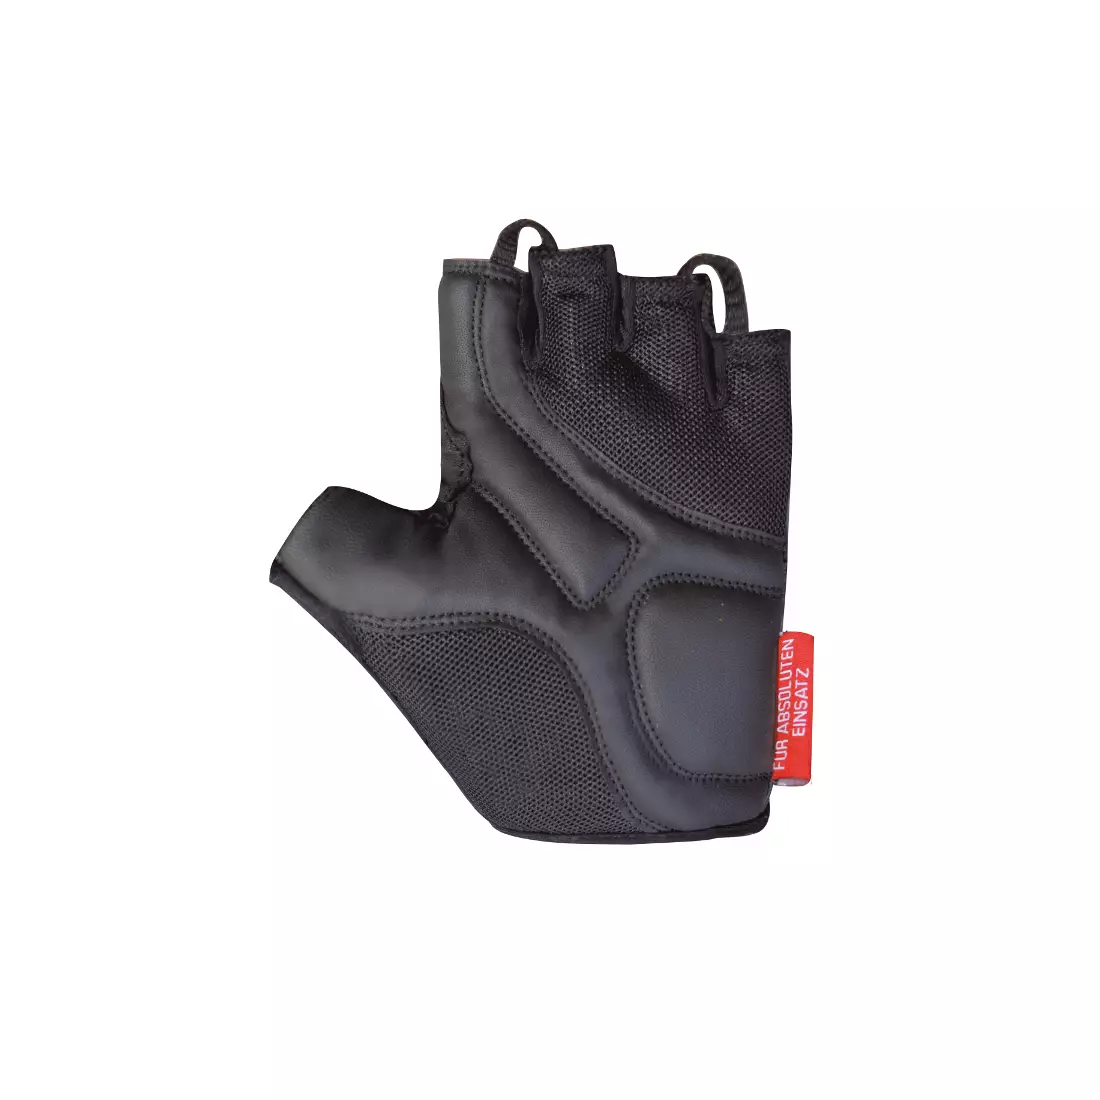 CHIBA PROFESSIONAL men's cycling gloves, black